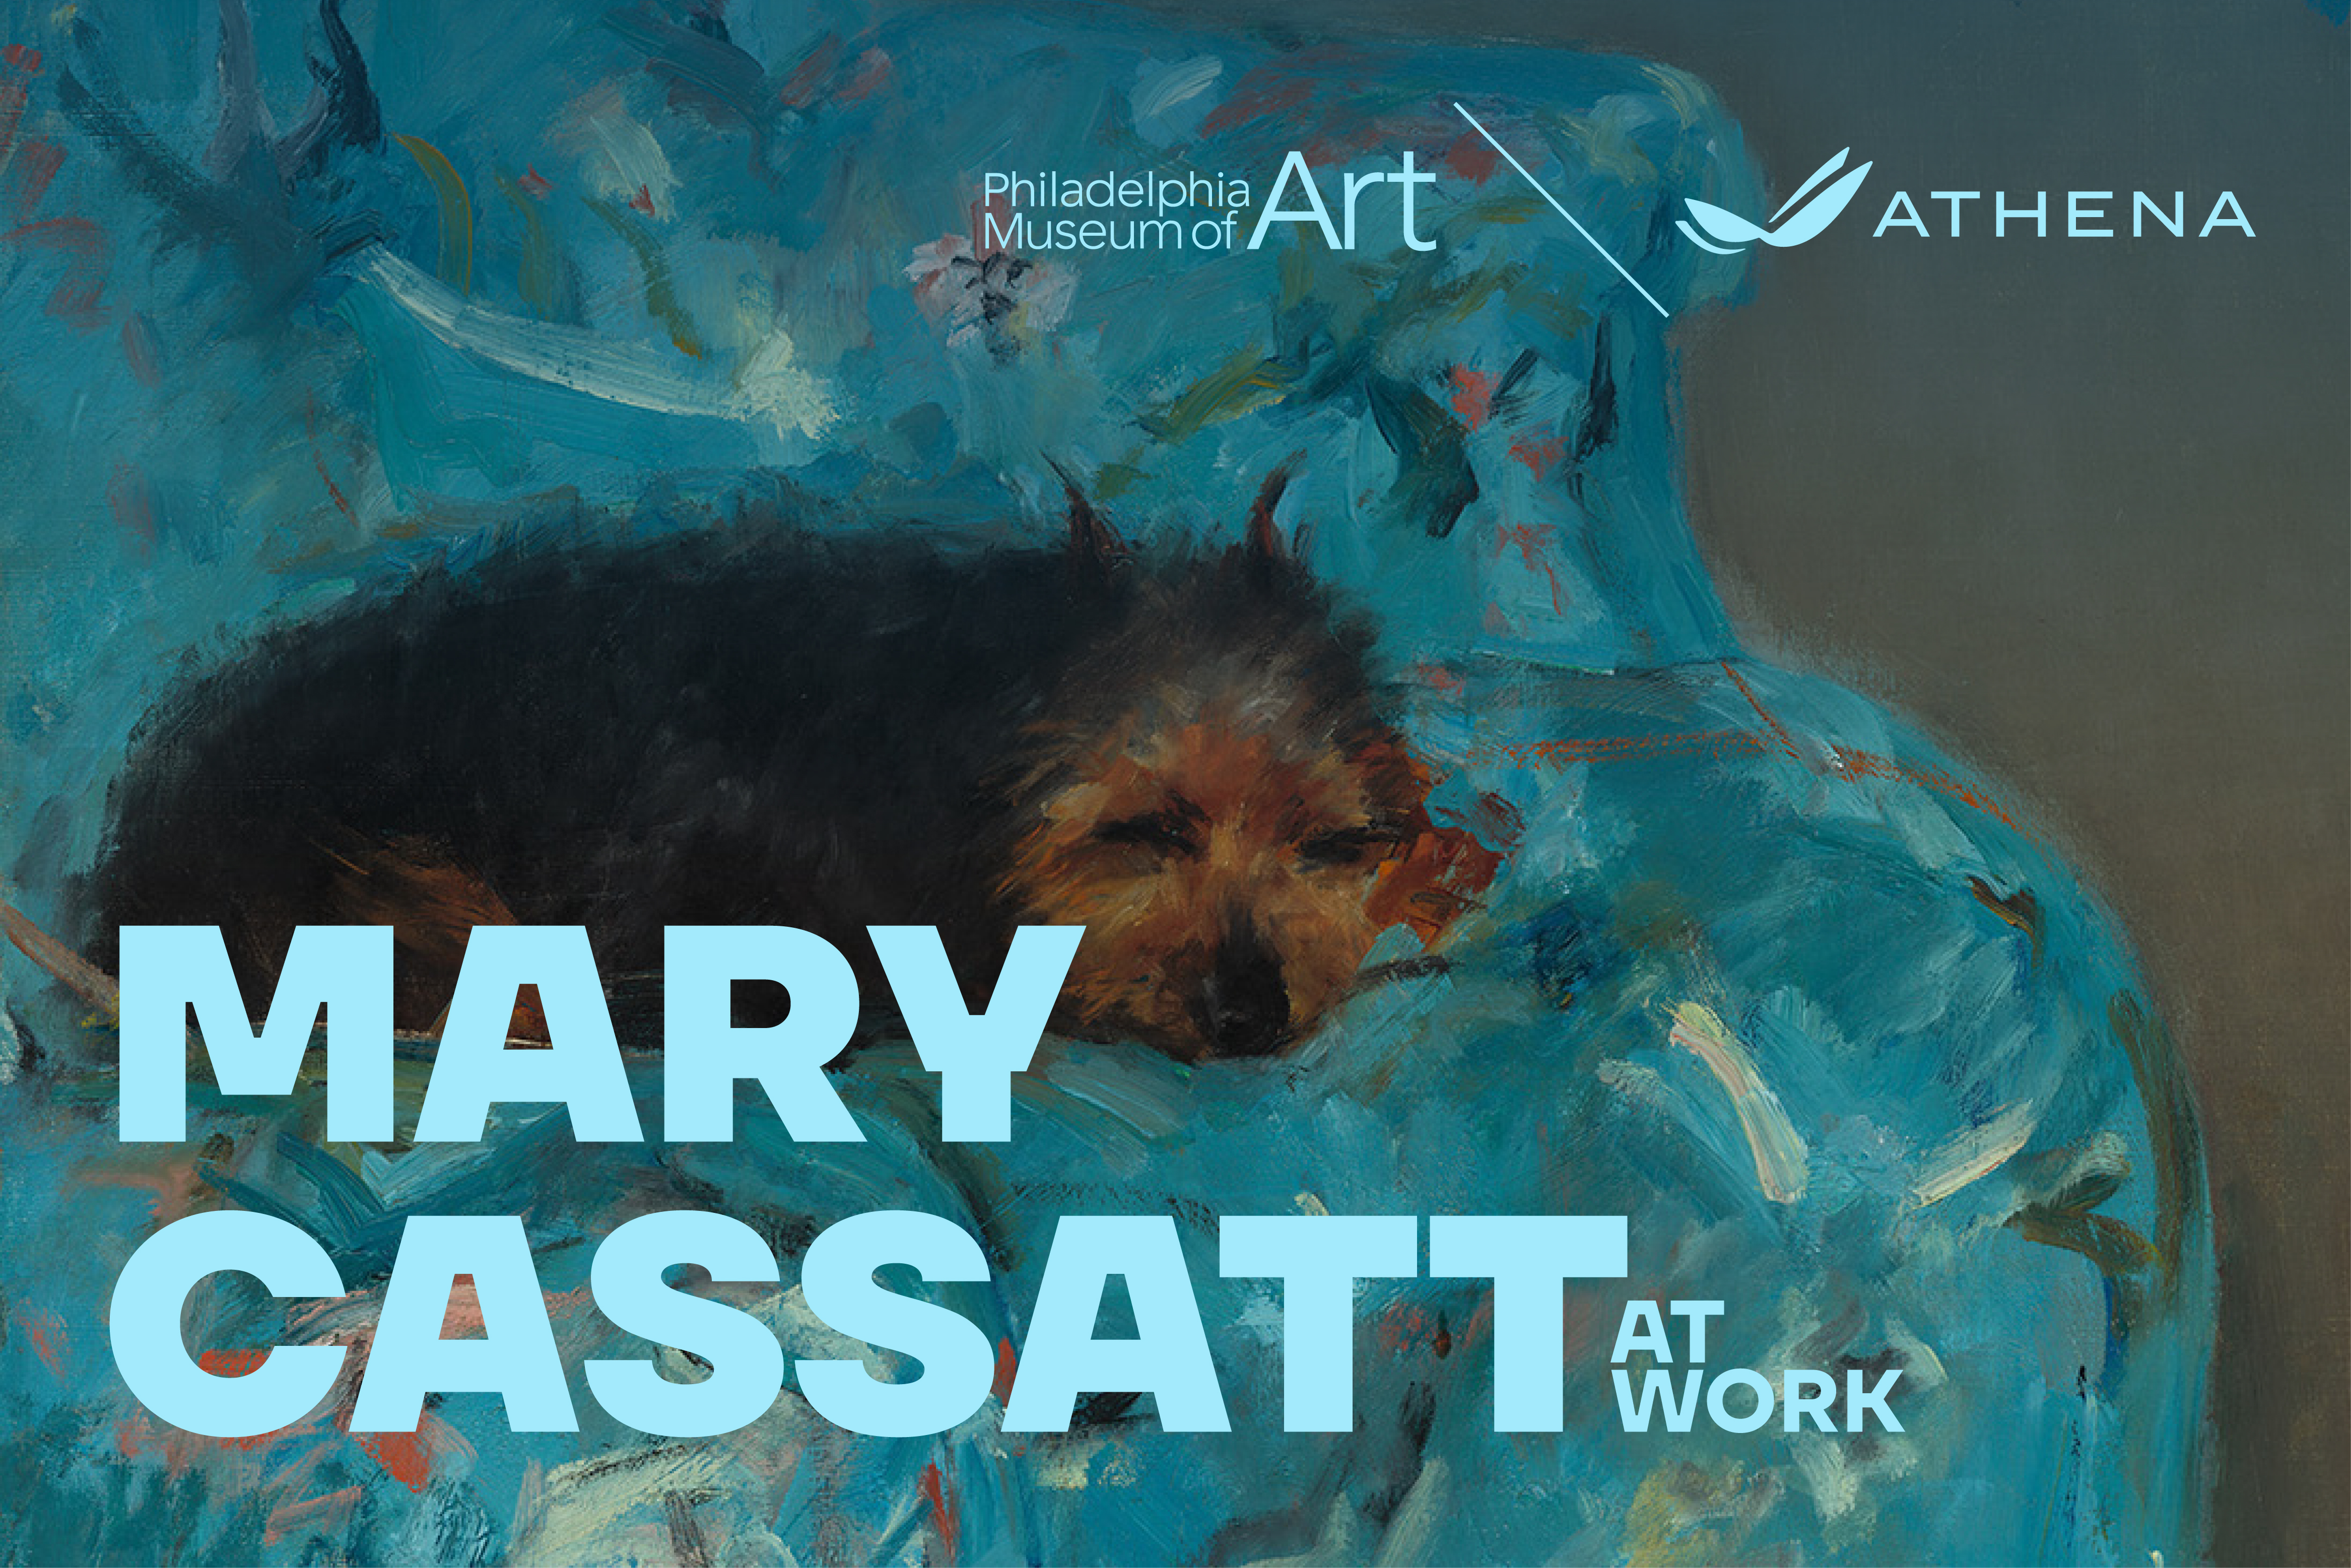 Cassatt Exhibition Sponsorship Announcement